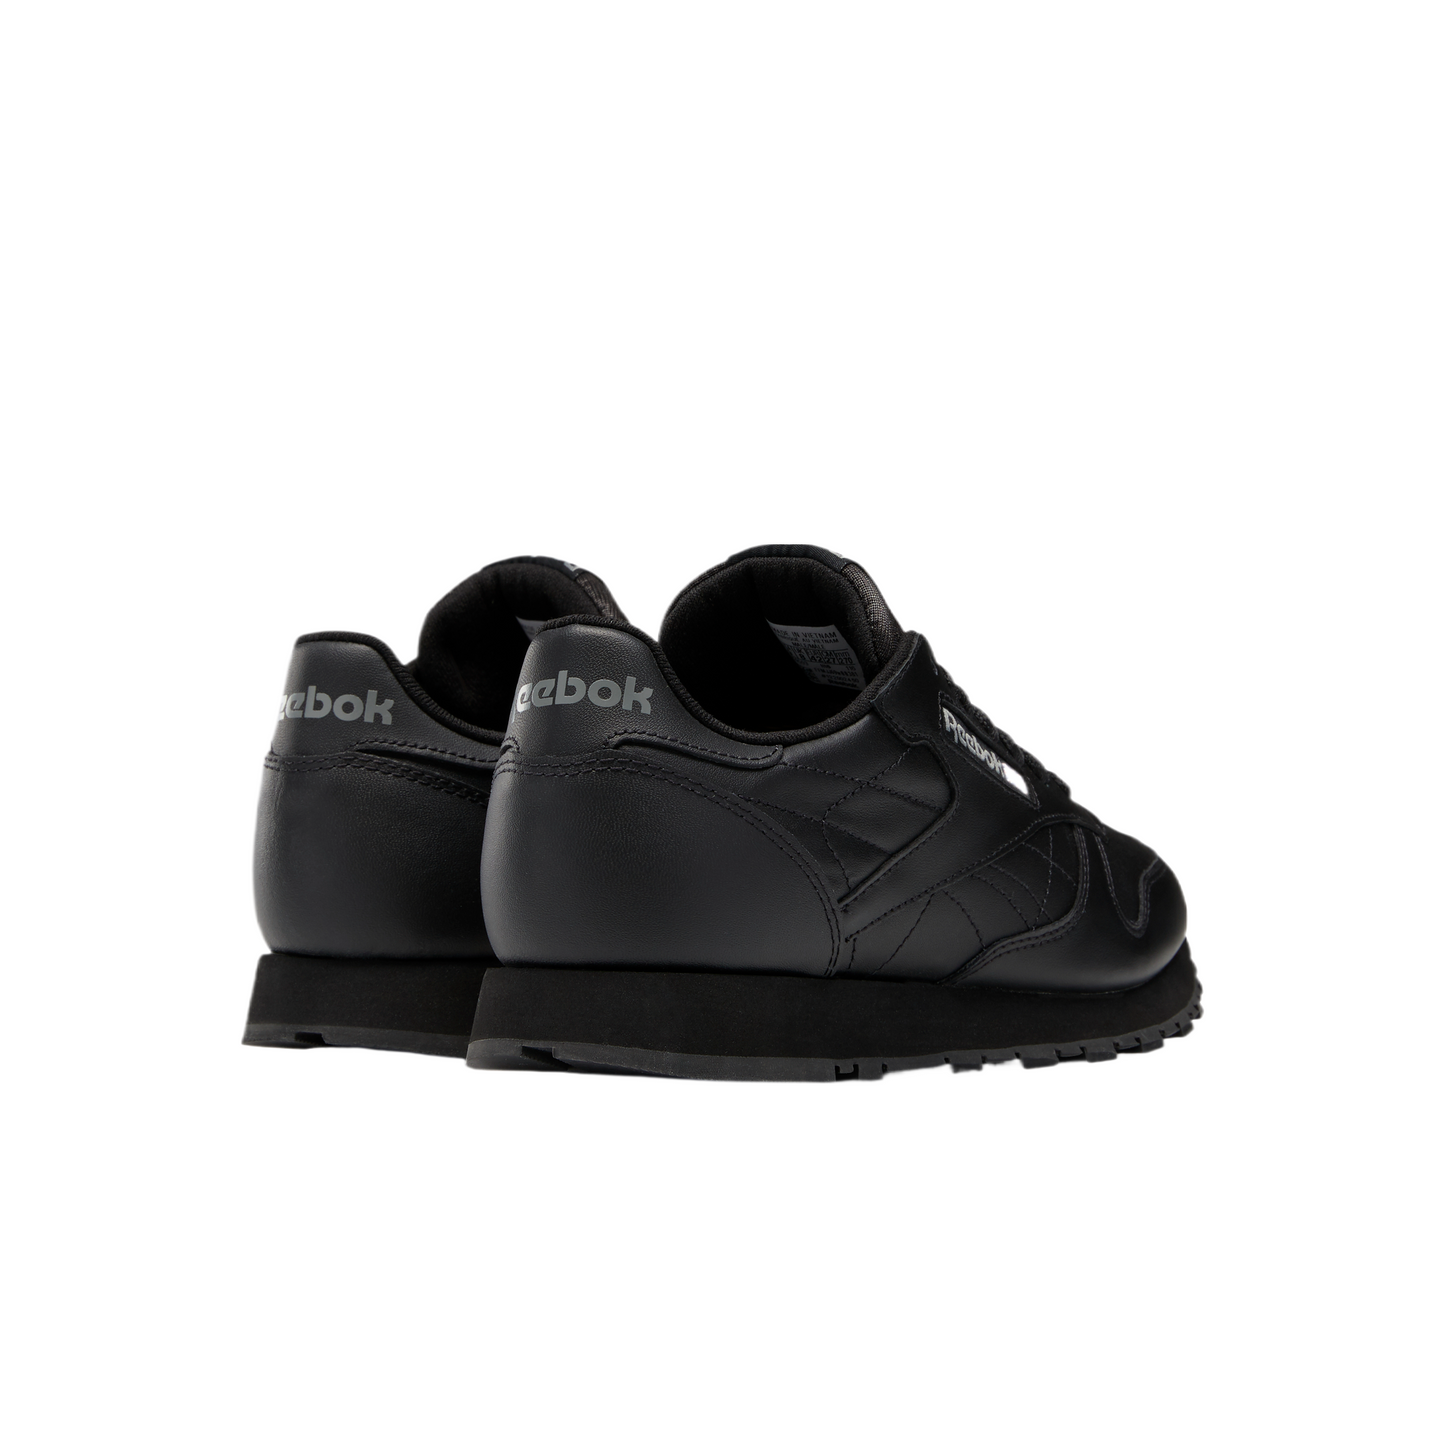 Reebok Adult Unisex Classic Leather Running Shoe Black/Black/Purgy5 116/GY0955